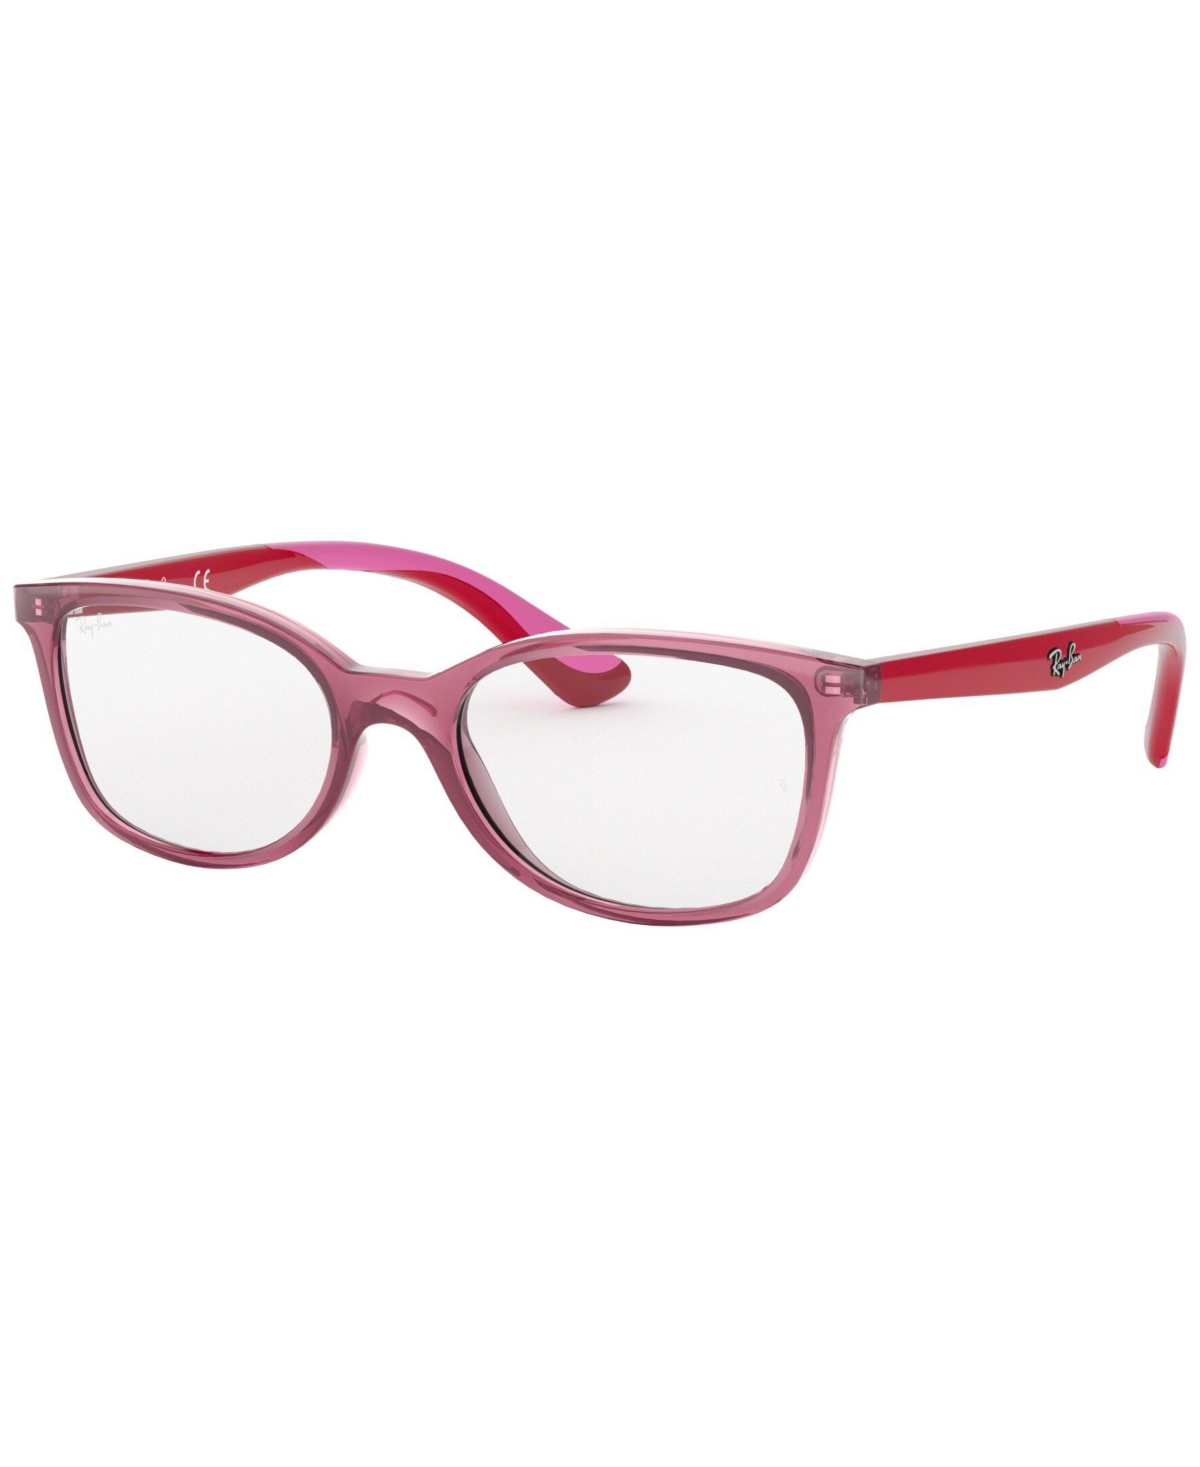 RY1586 Child Square Eyeglasses - Red